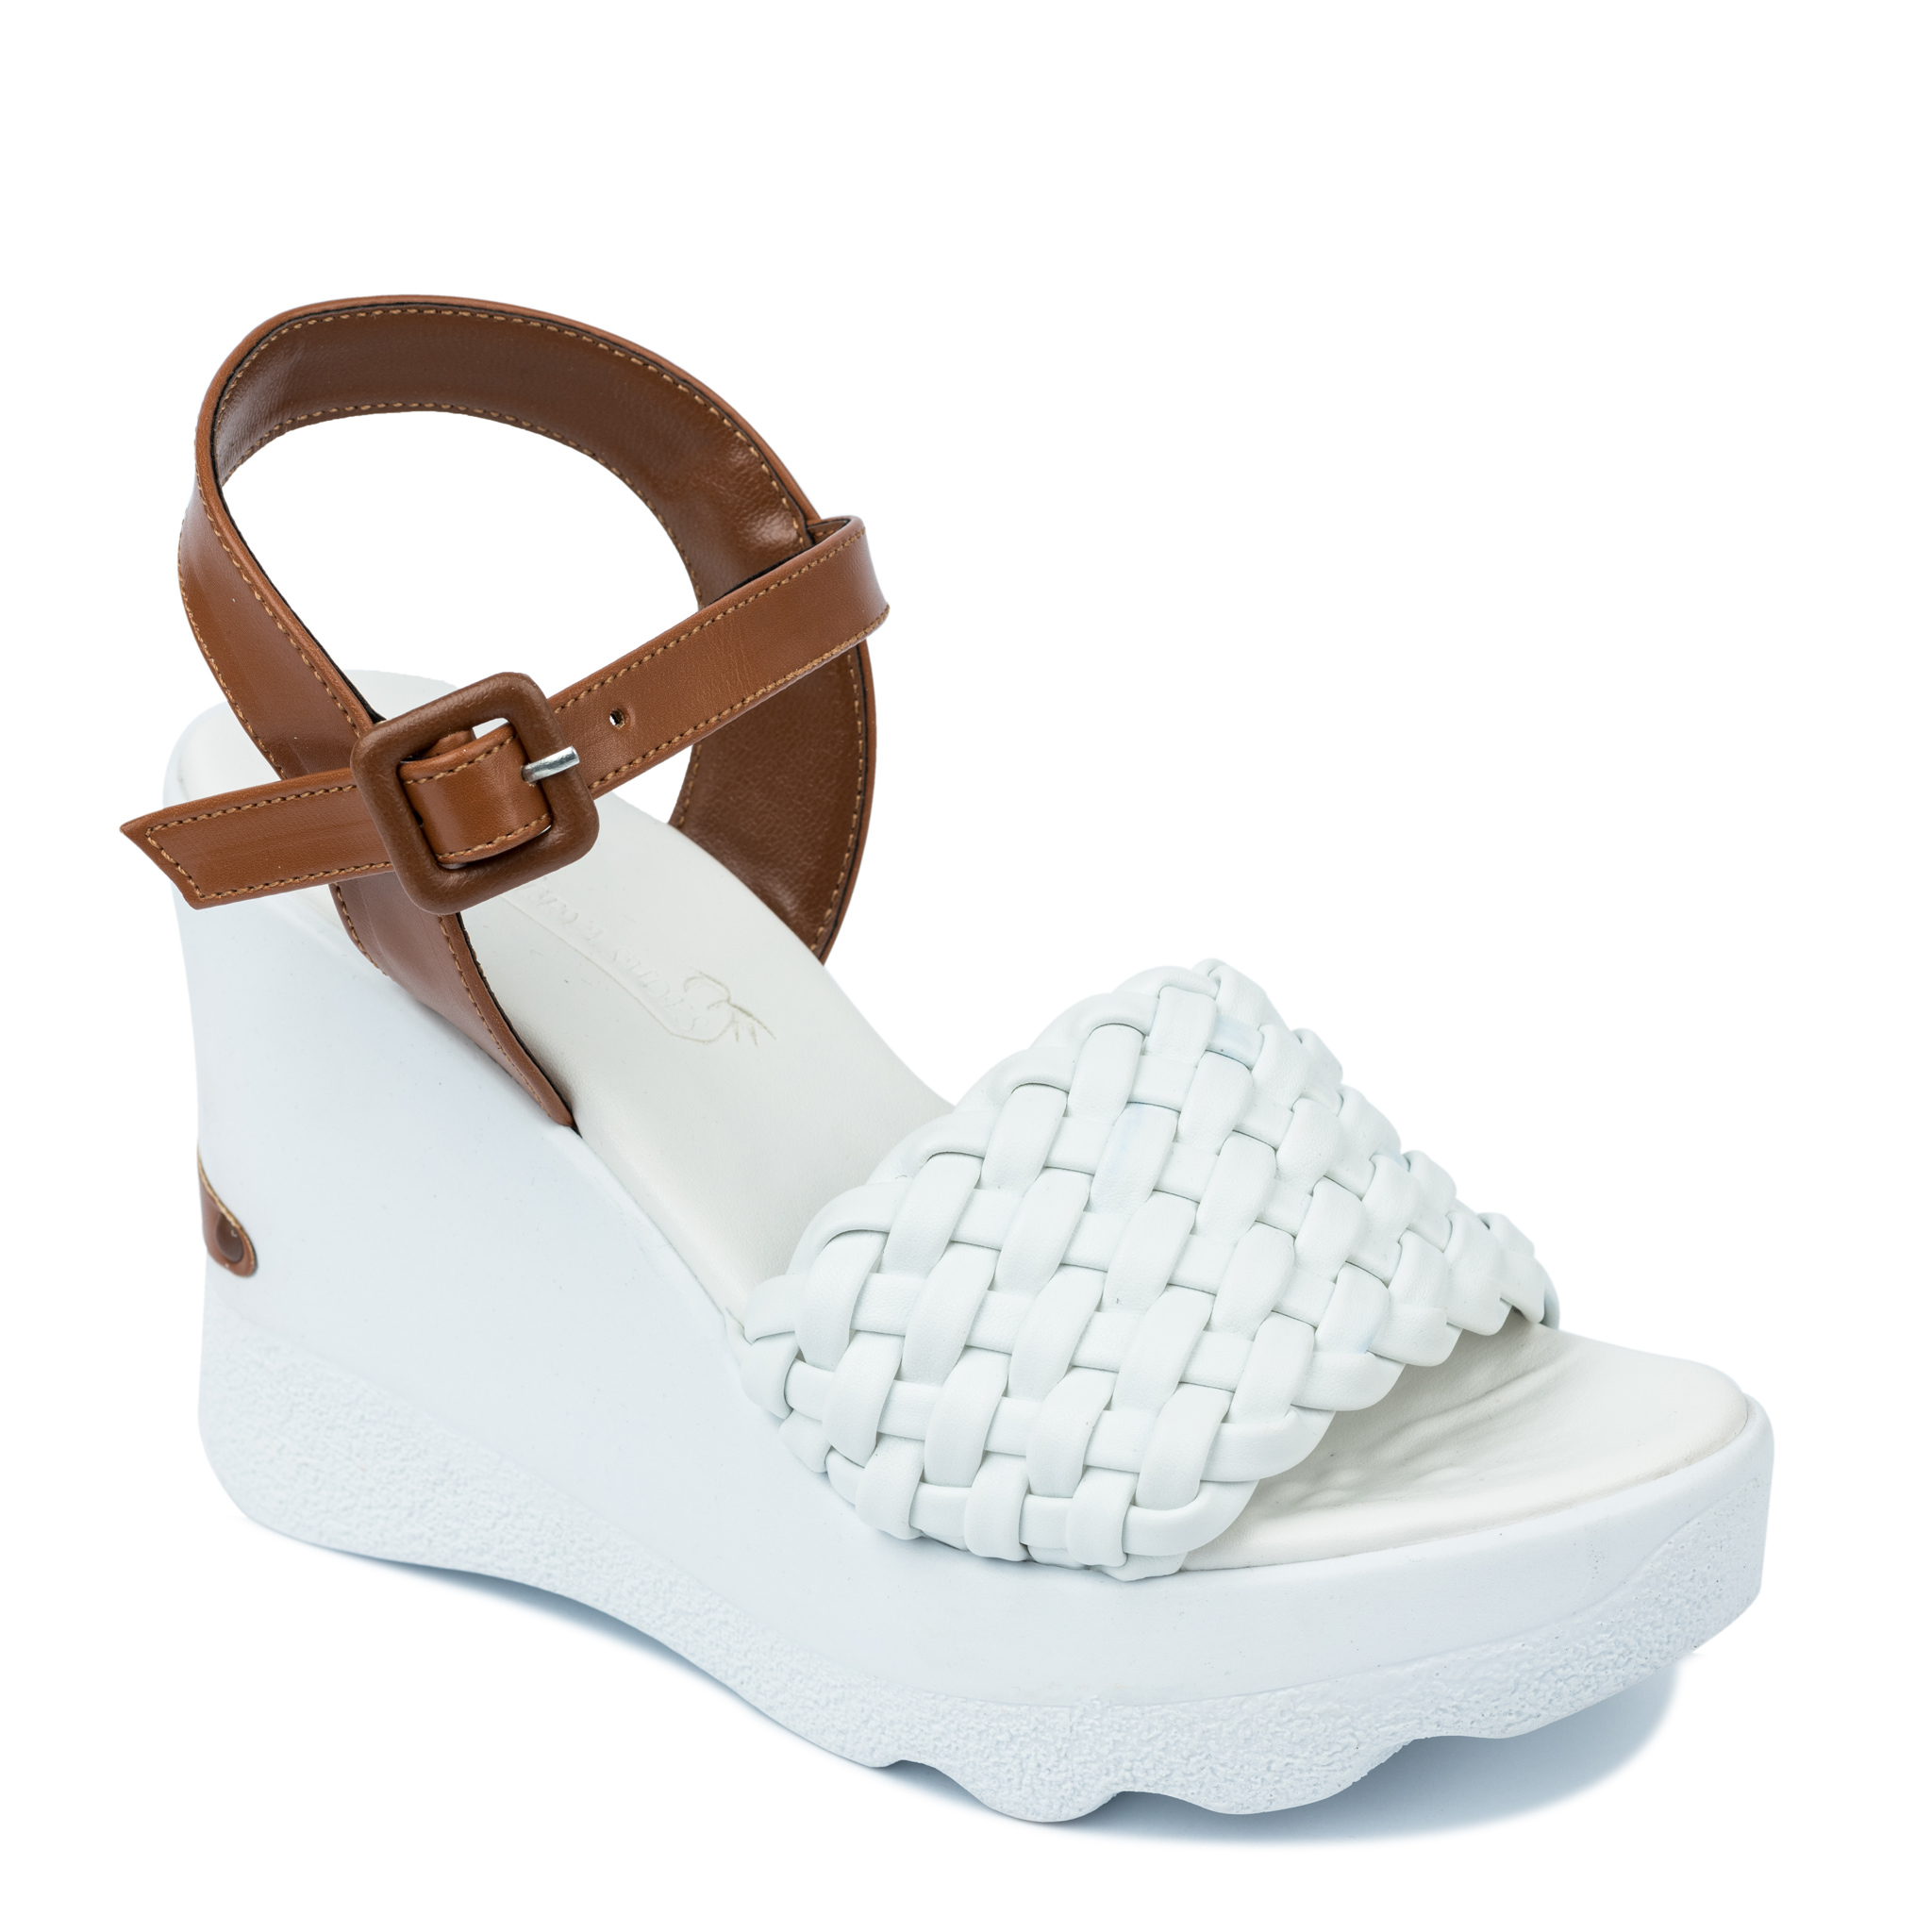 Women sandals A324 - WHITE